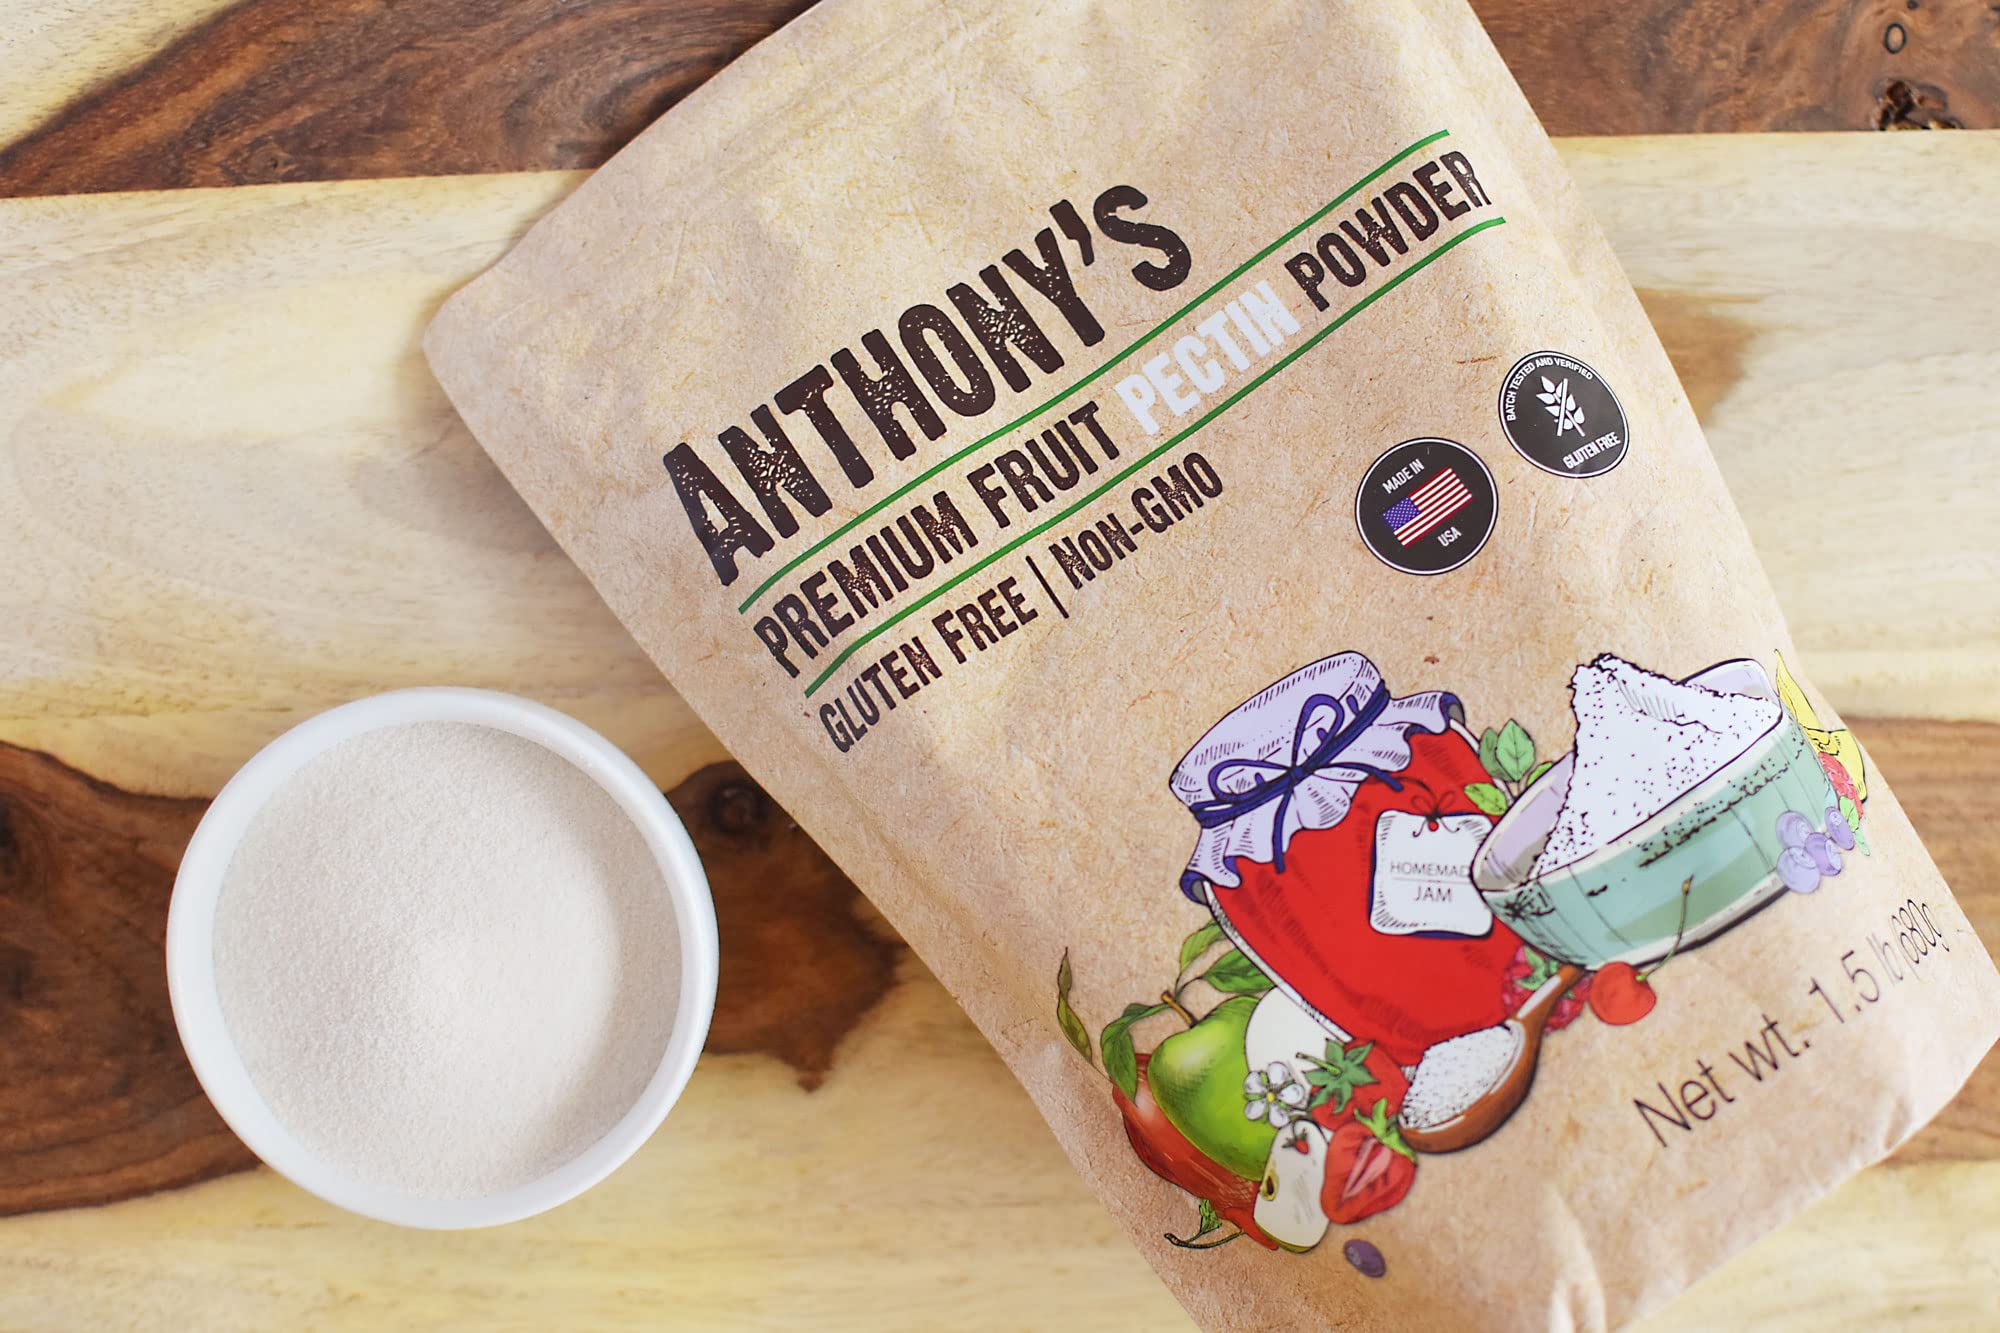 Anthony's Premium Fruit Pectin, 1.5 lb, Gluten Free, Non GMO, Vegan